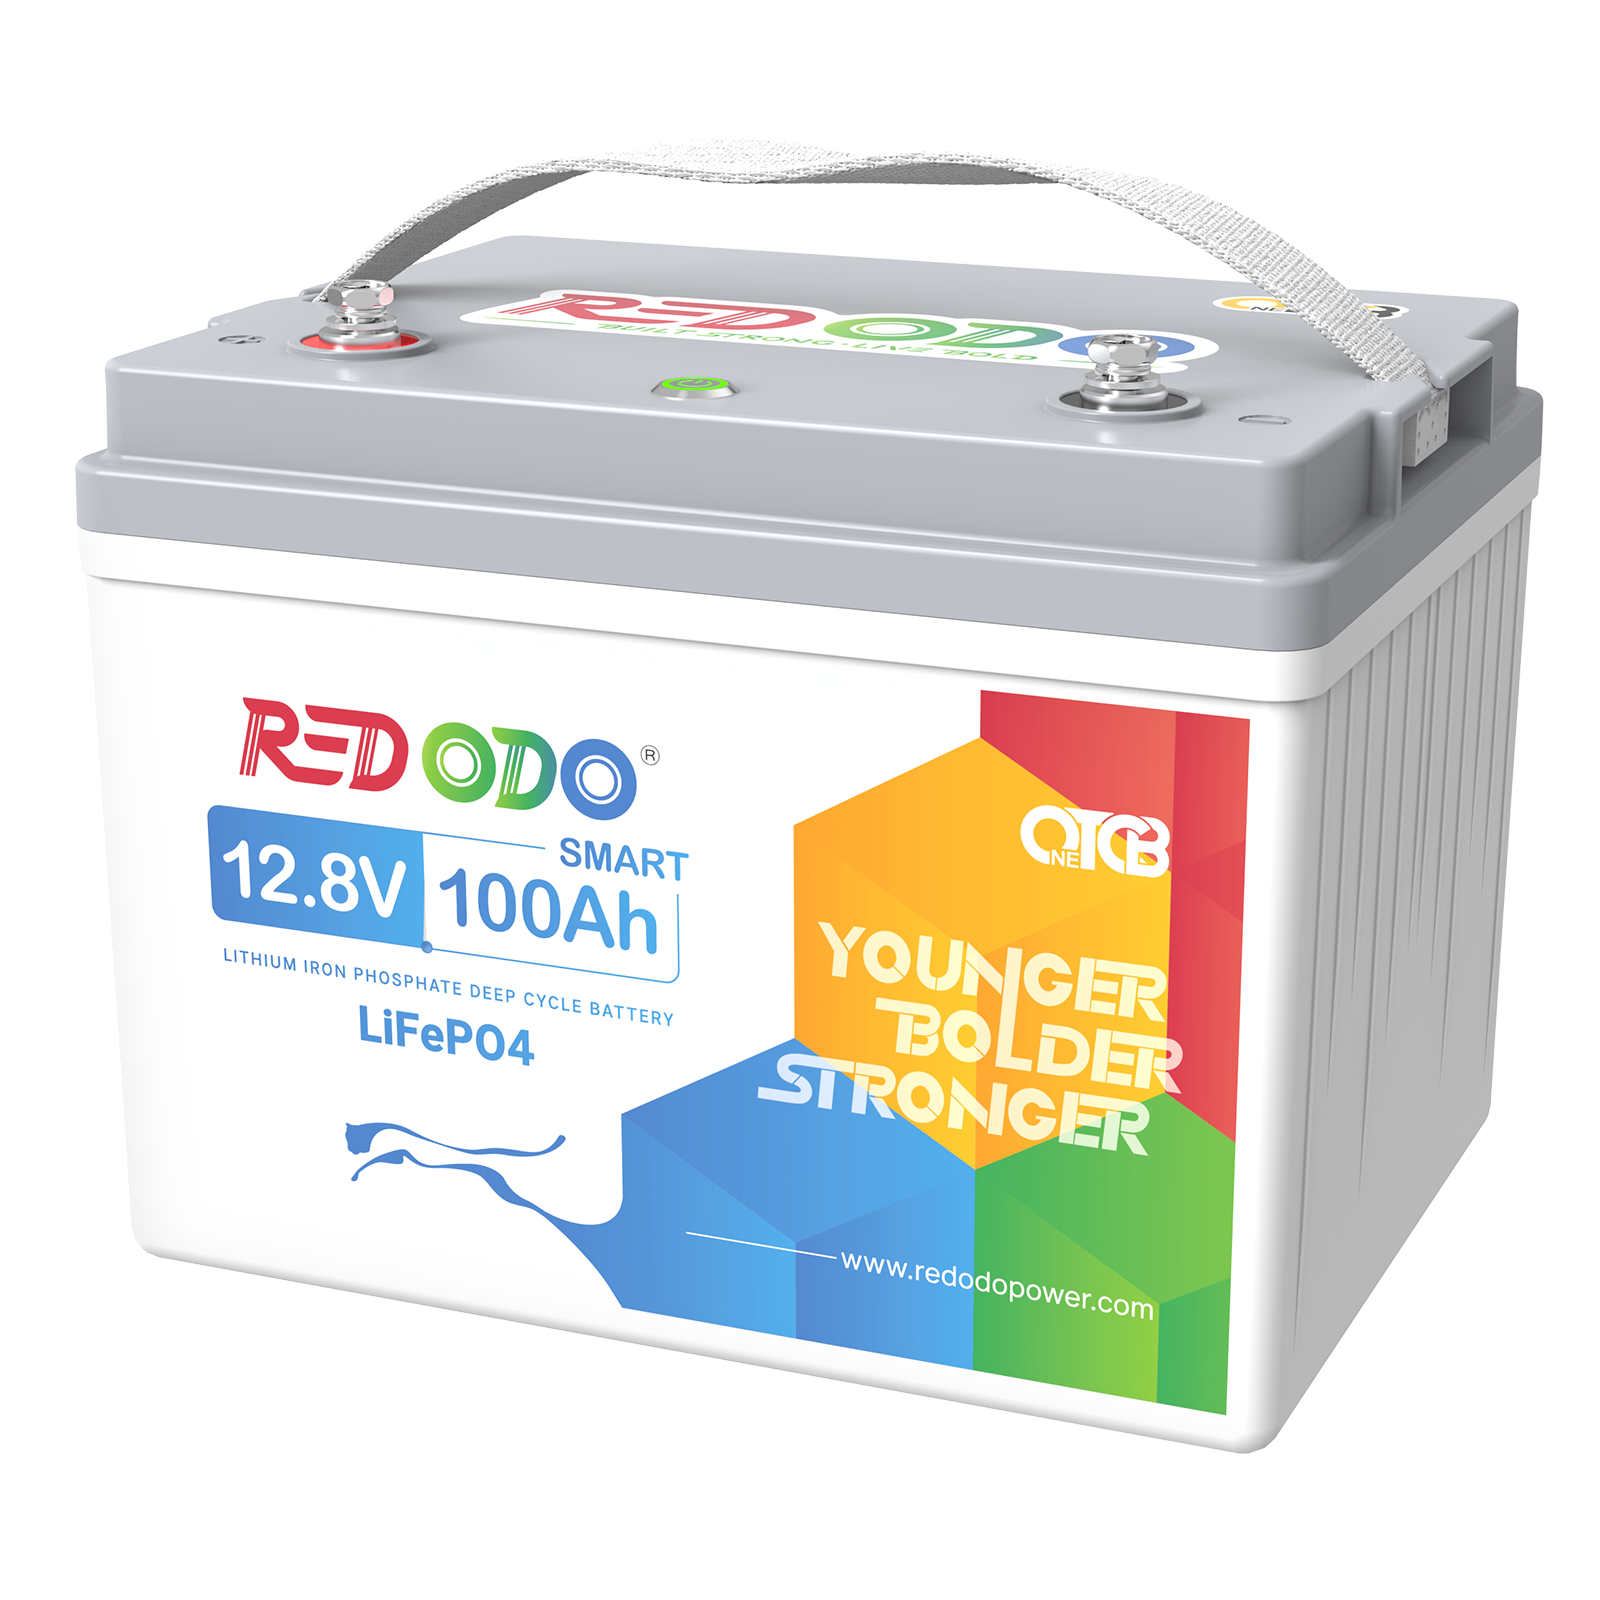 Redodo Portable Battery Box Redodo